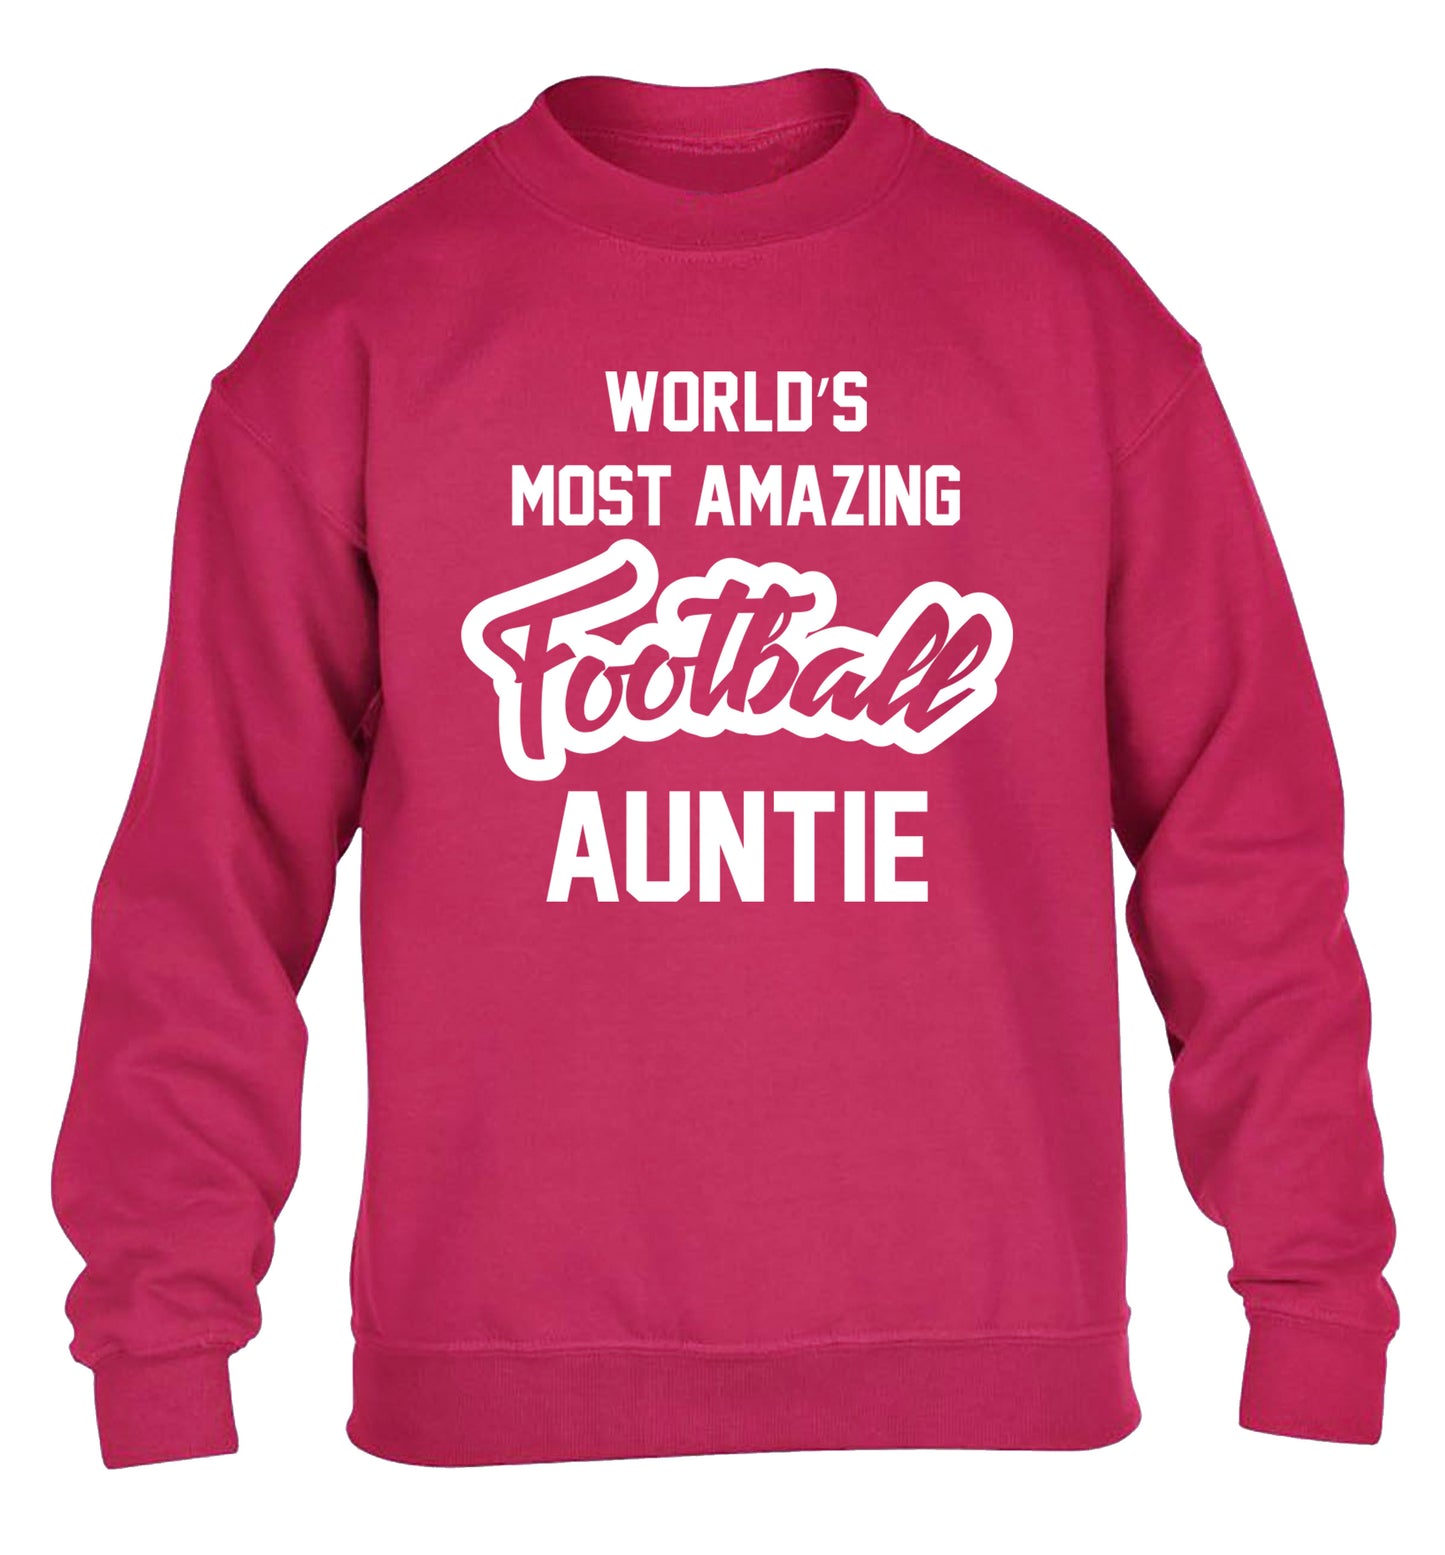 Worlds most amazing football auntie children's pink sweater 12-14 Years